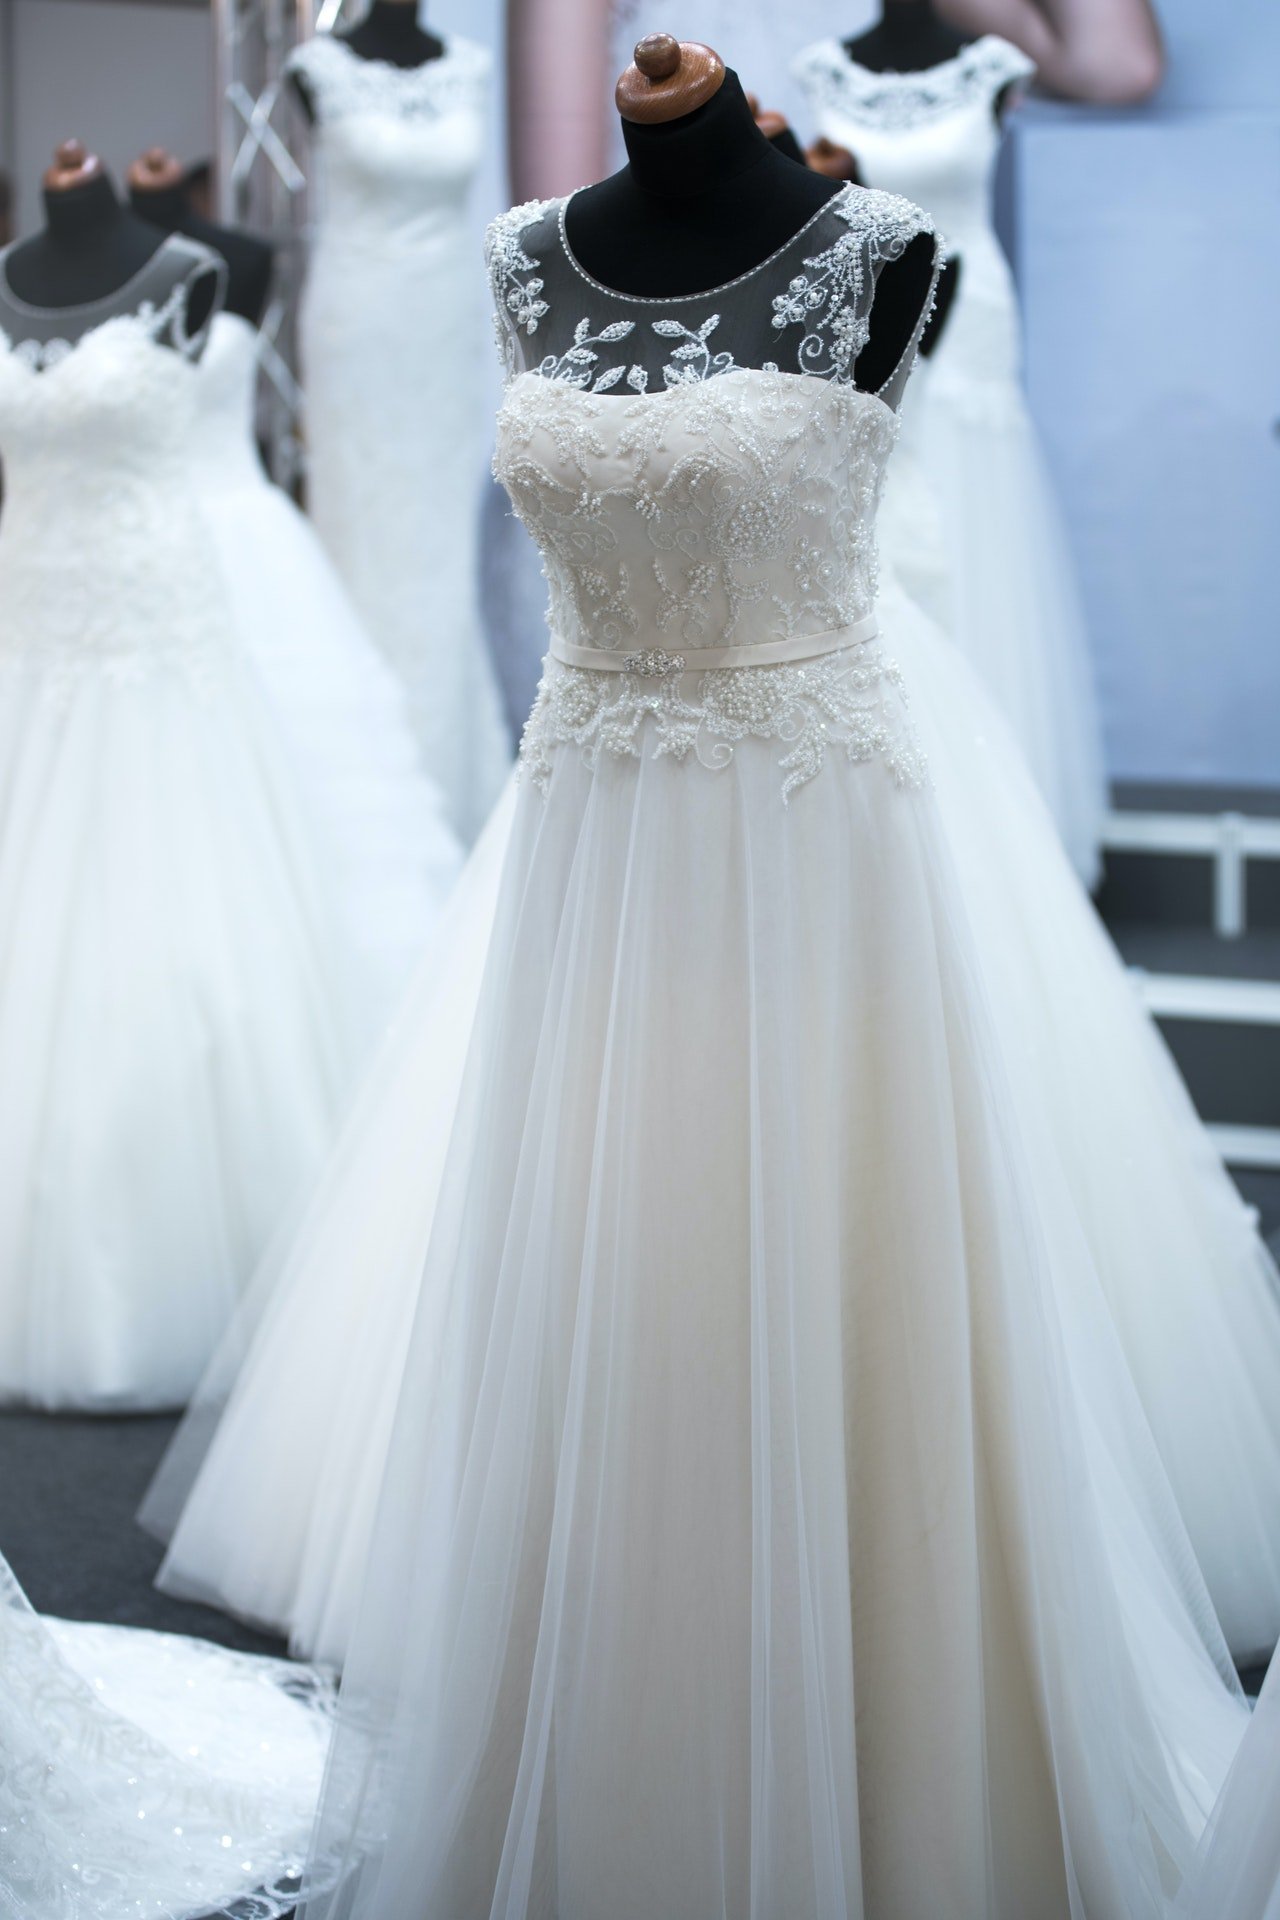 Vestido de novia blanco.| Foto: Pexels